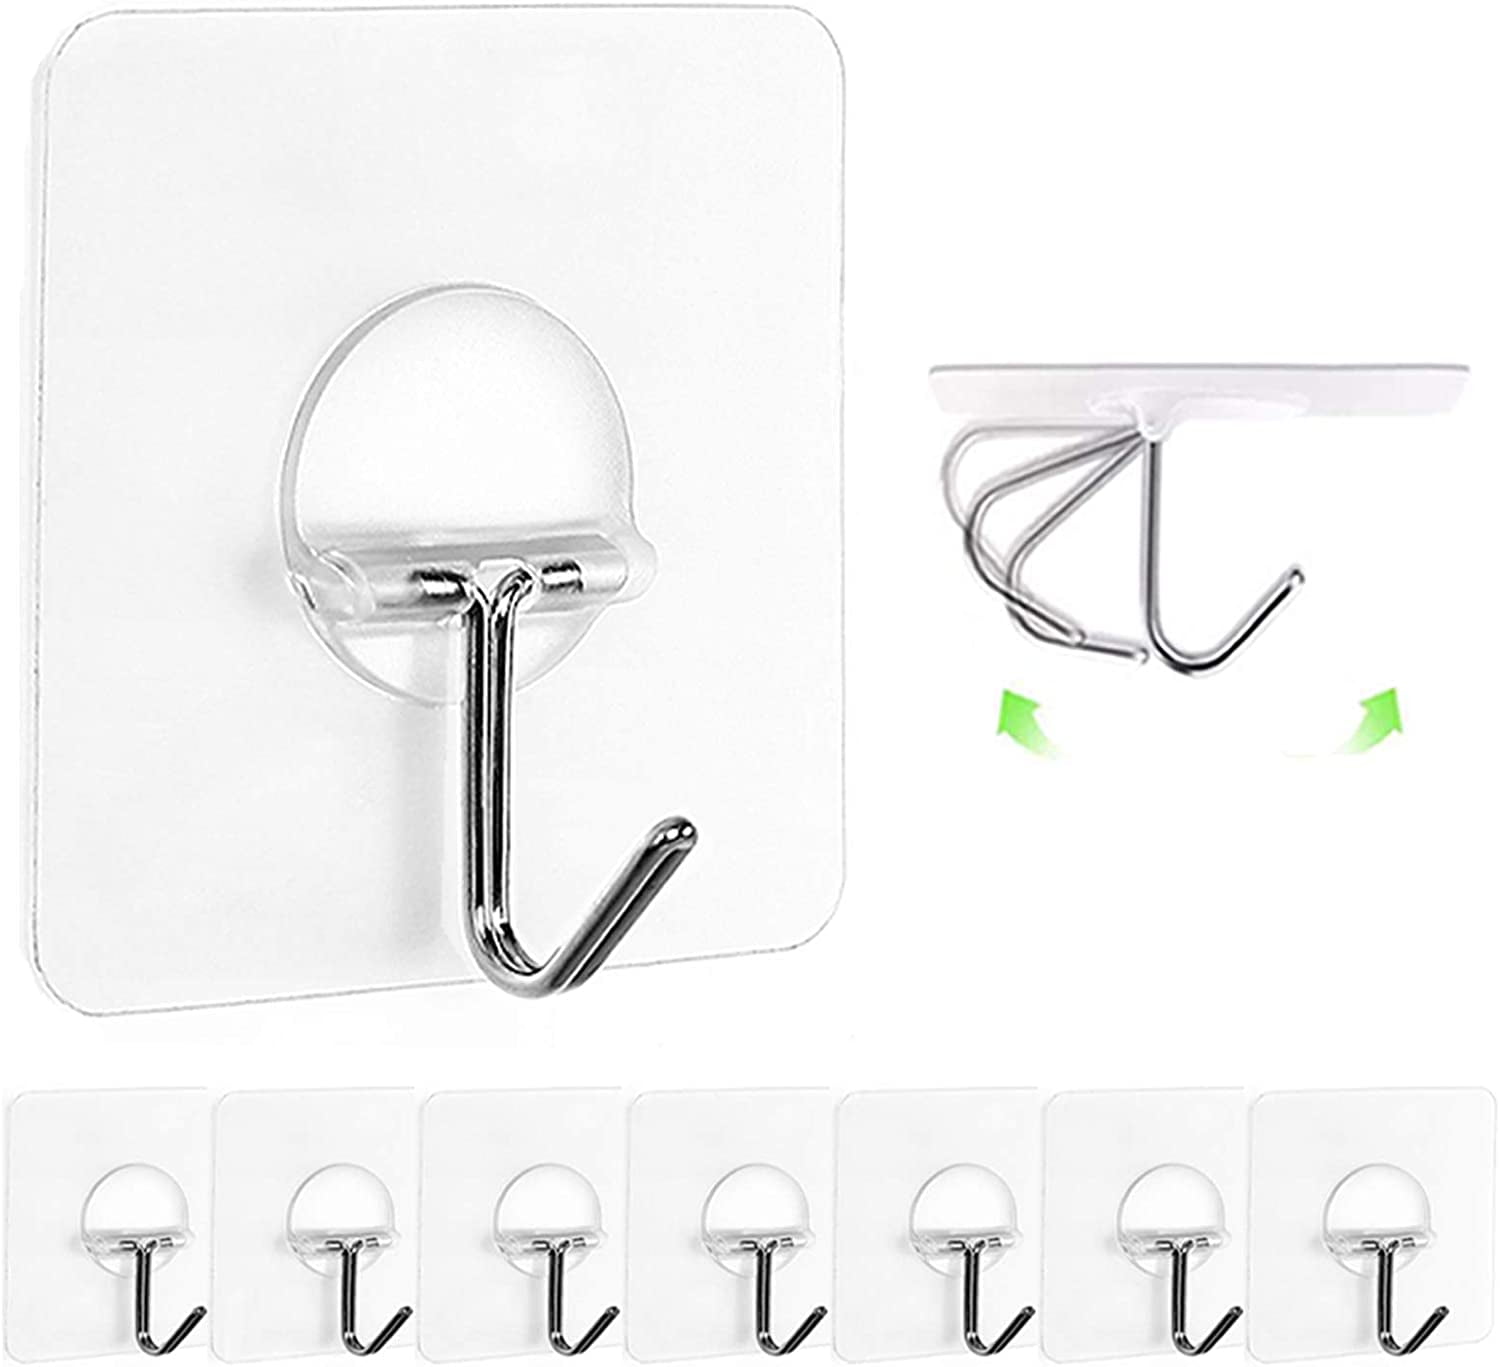 Adhesive Hooks Heavy Duty Stick on Wall Hooks Hangers Towel Bathroom 4 Packs... 